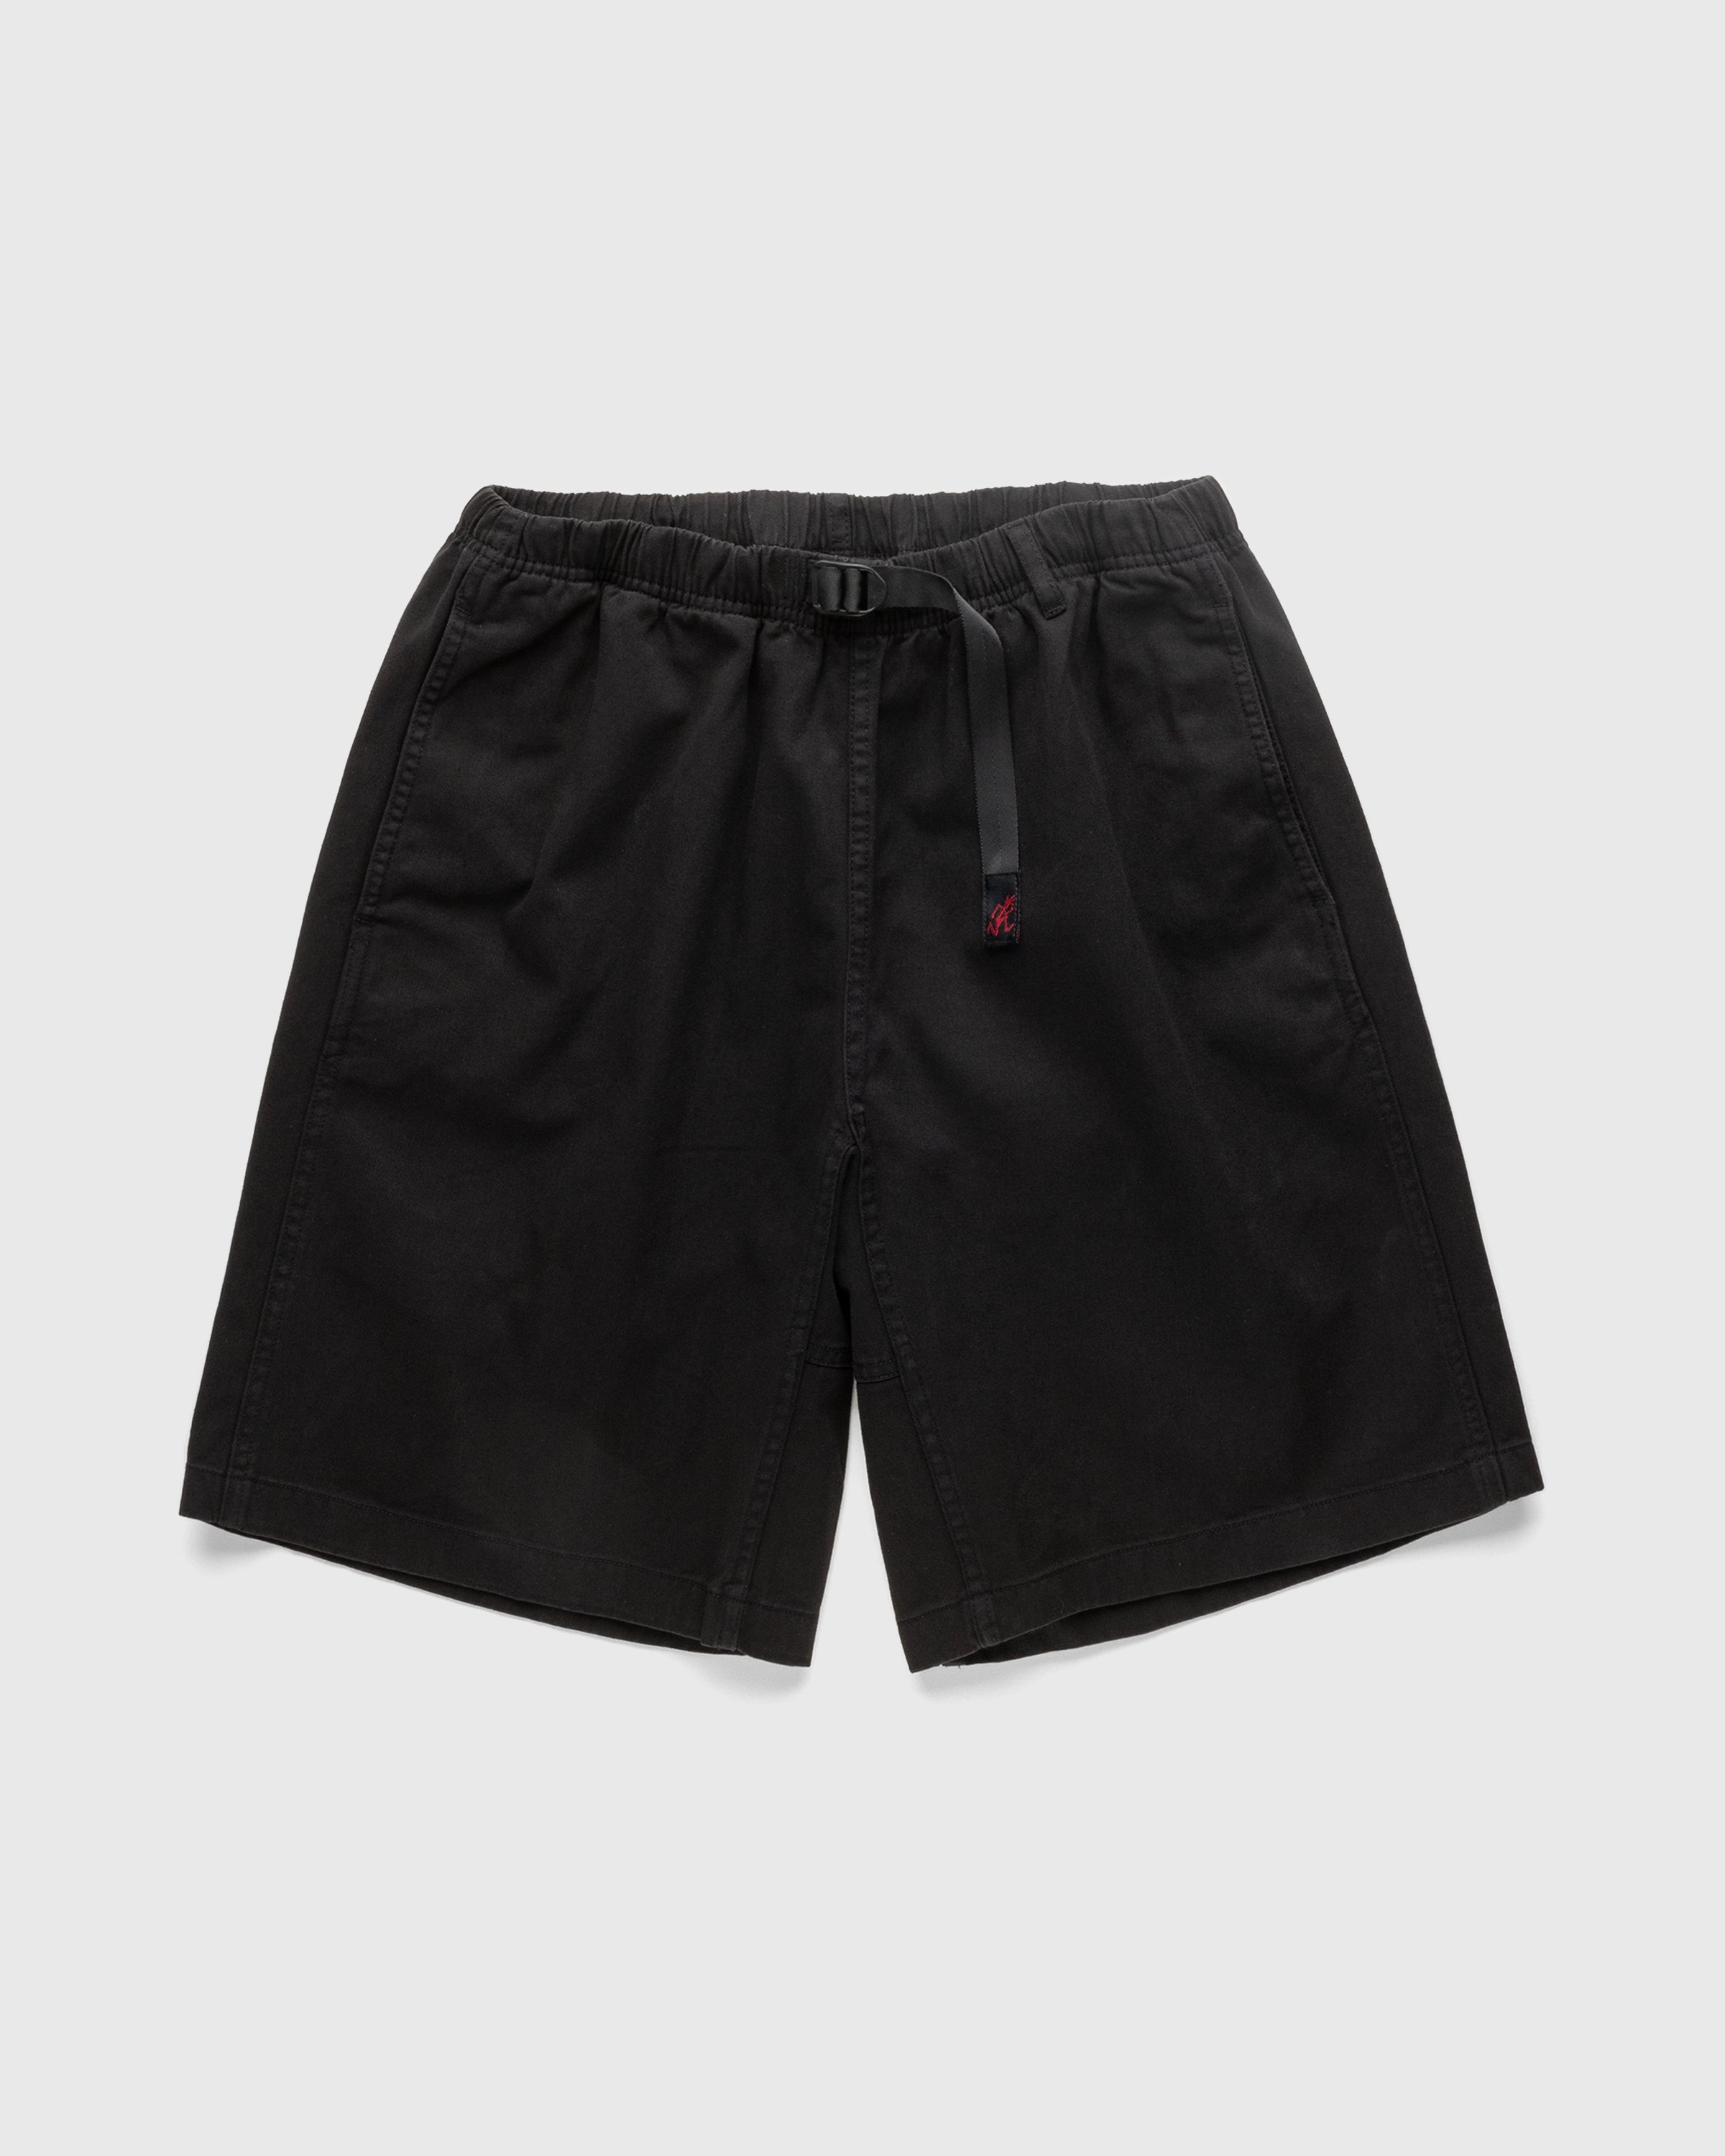 Gramicci – G-Shorts Black - Bermuda Cuts - Black - Image 1